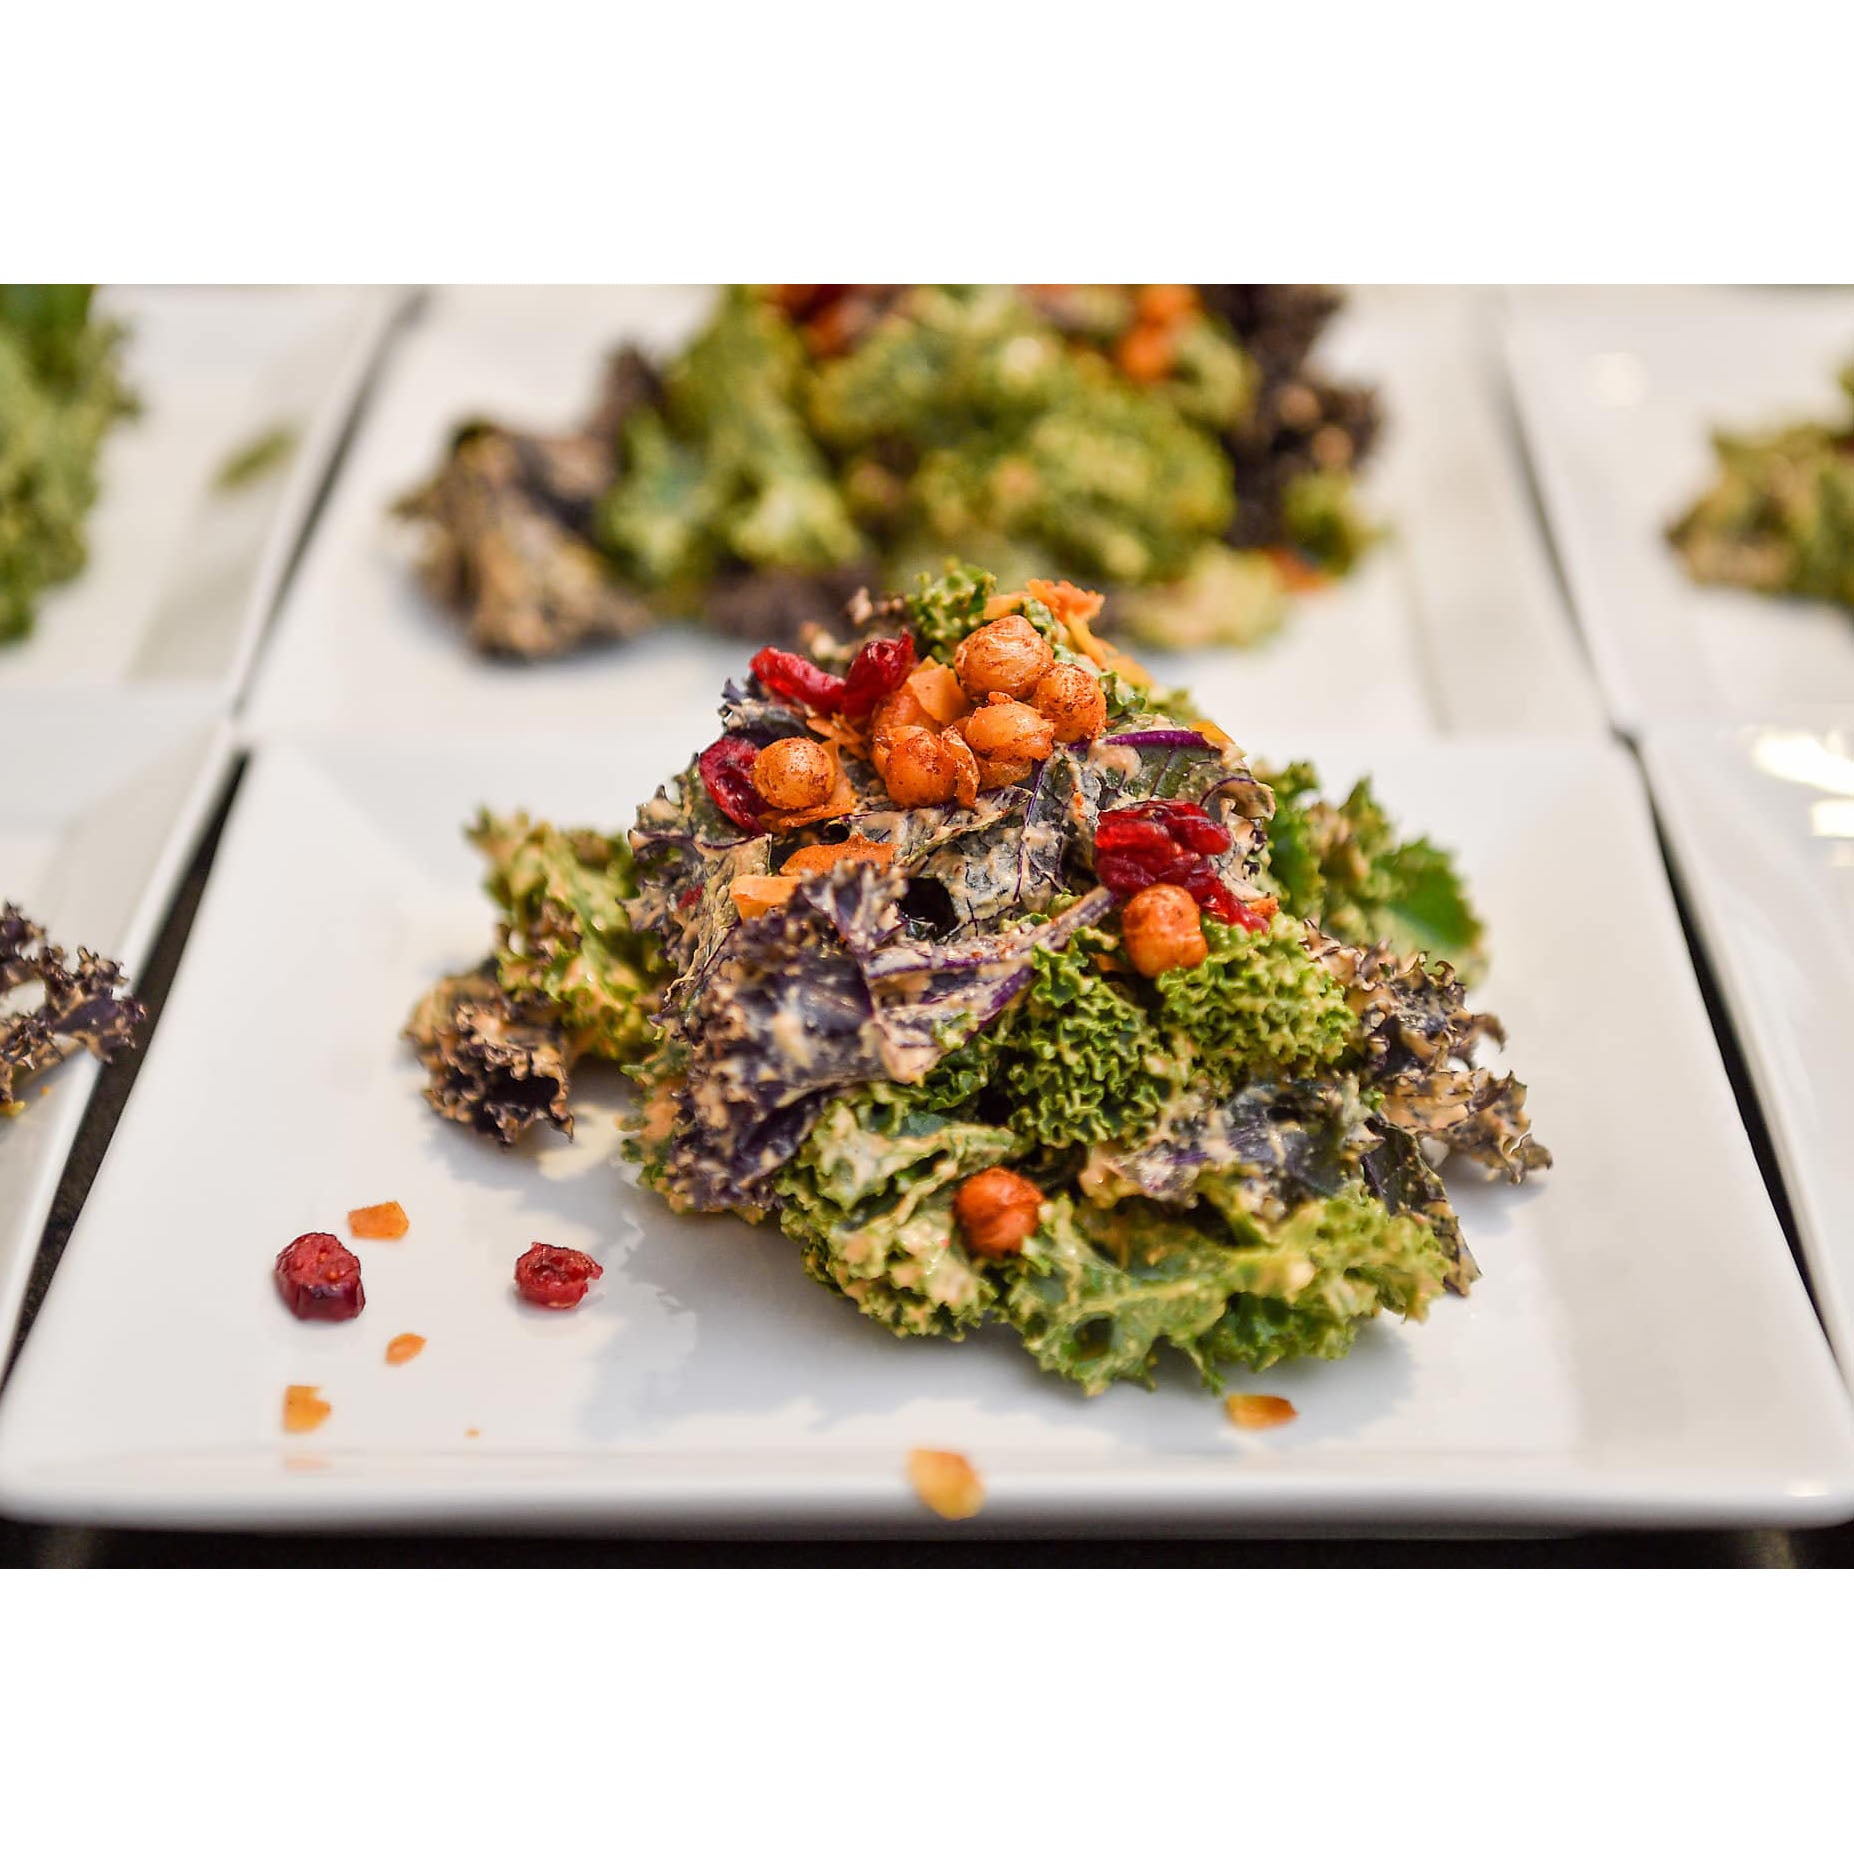 Individually plated Pukka kale salad